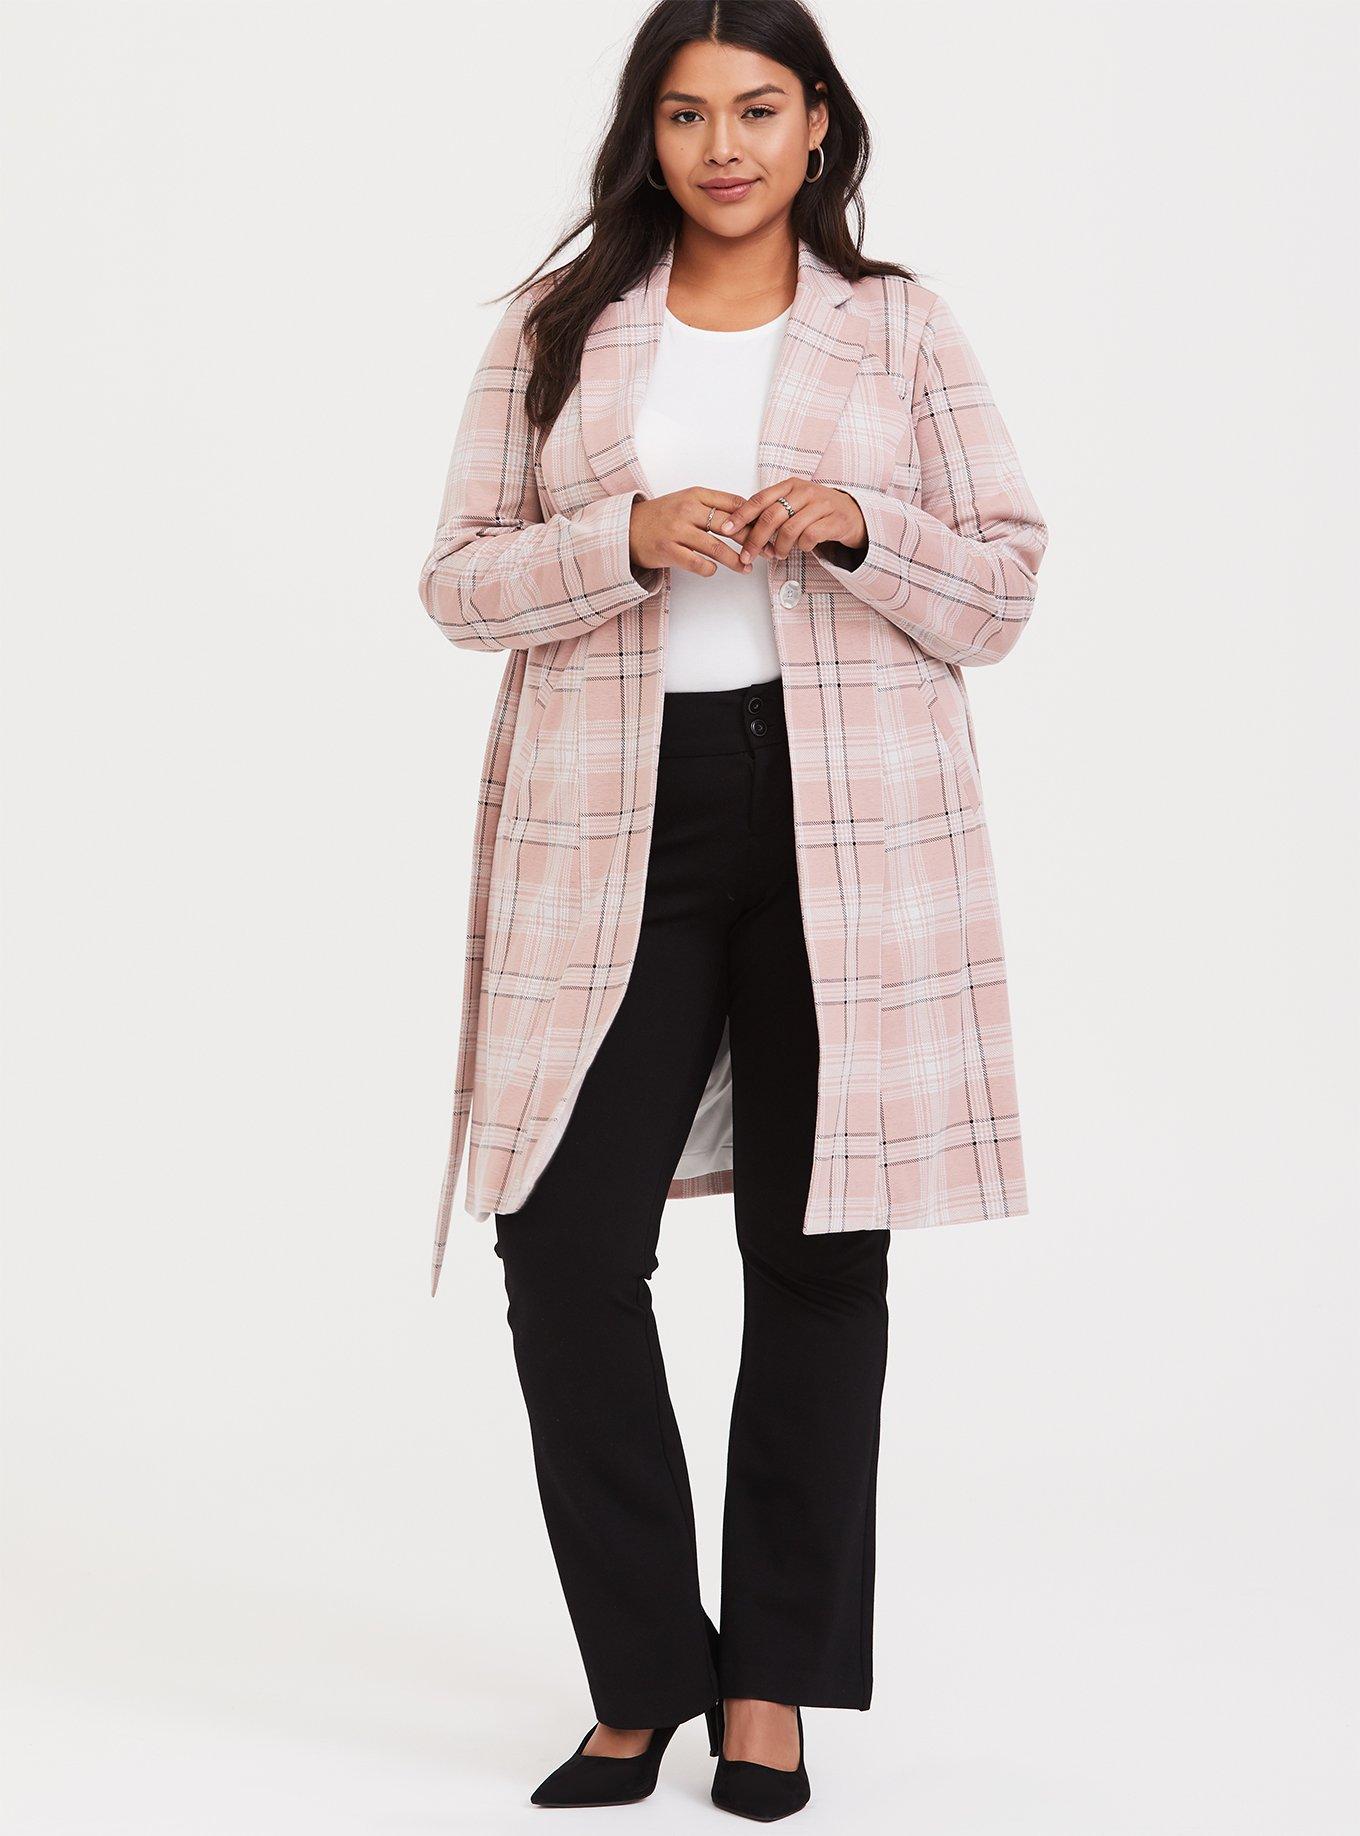 Plus Size - Blush Pink Plaid Self-Tie Longline Blazer - Torrid